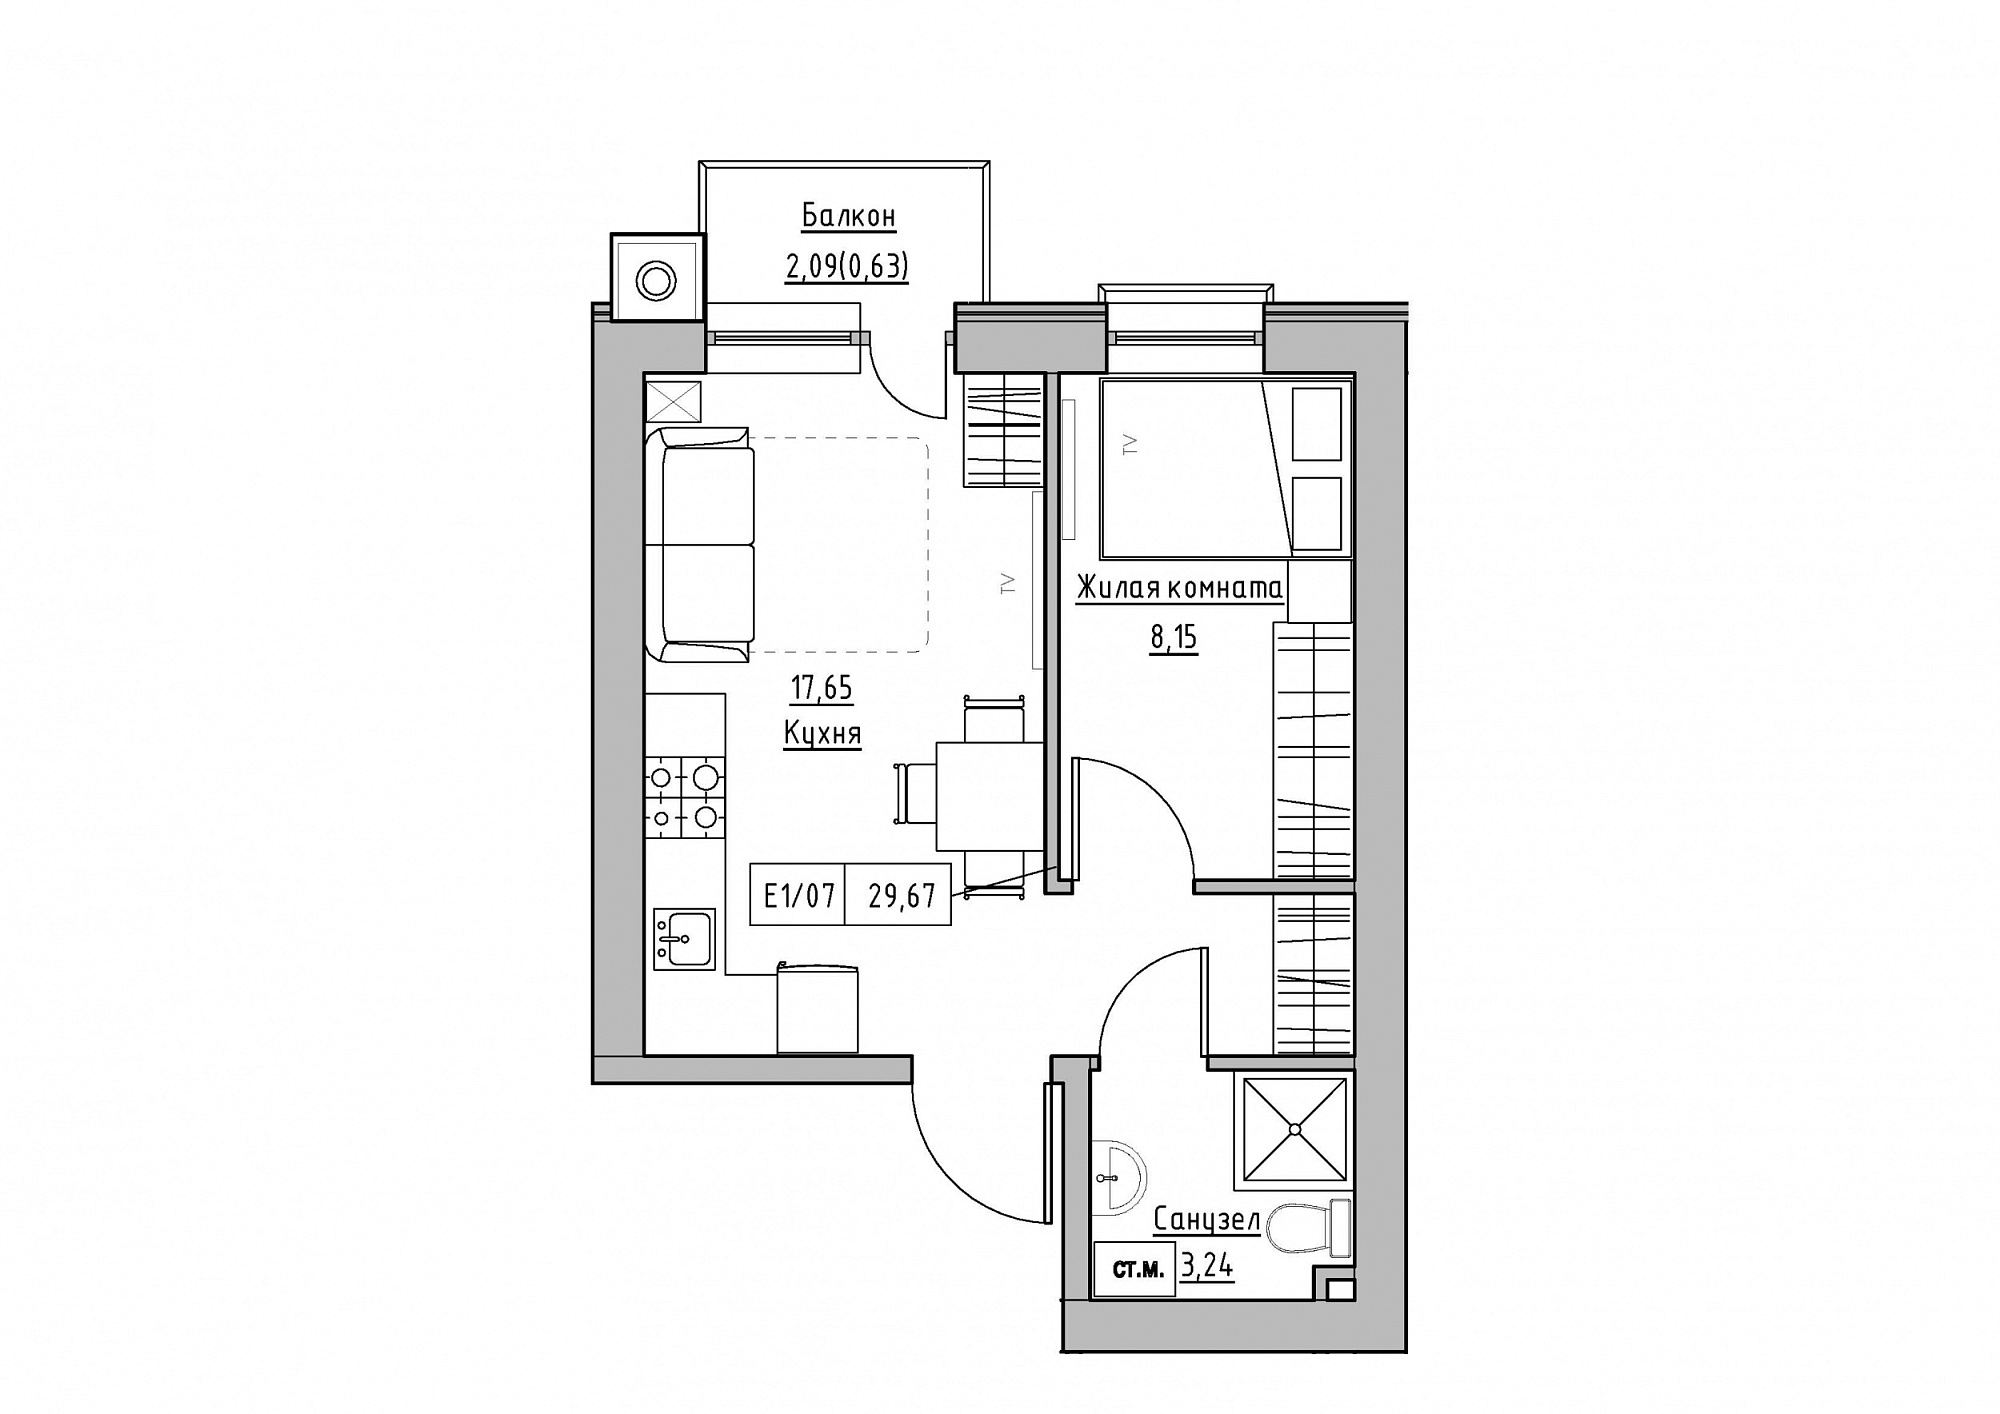 Planning 1-rm flats area 29.67m2, KS-012-05/0003.